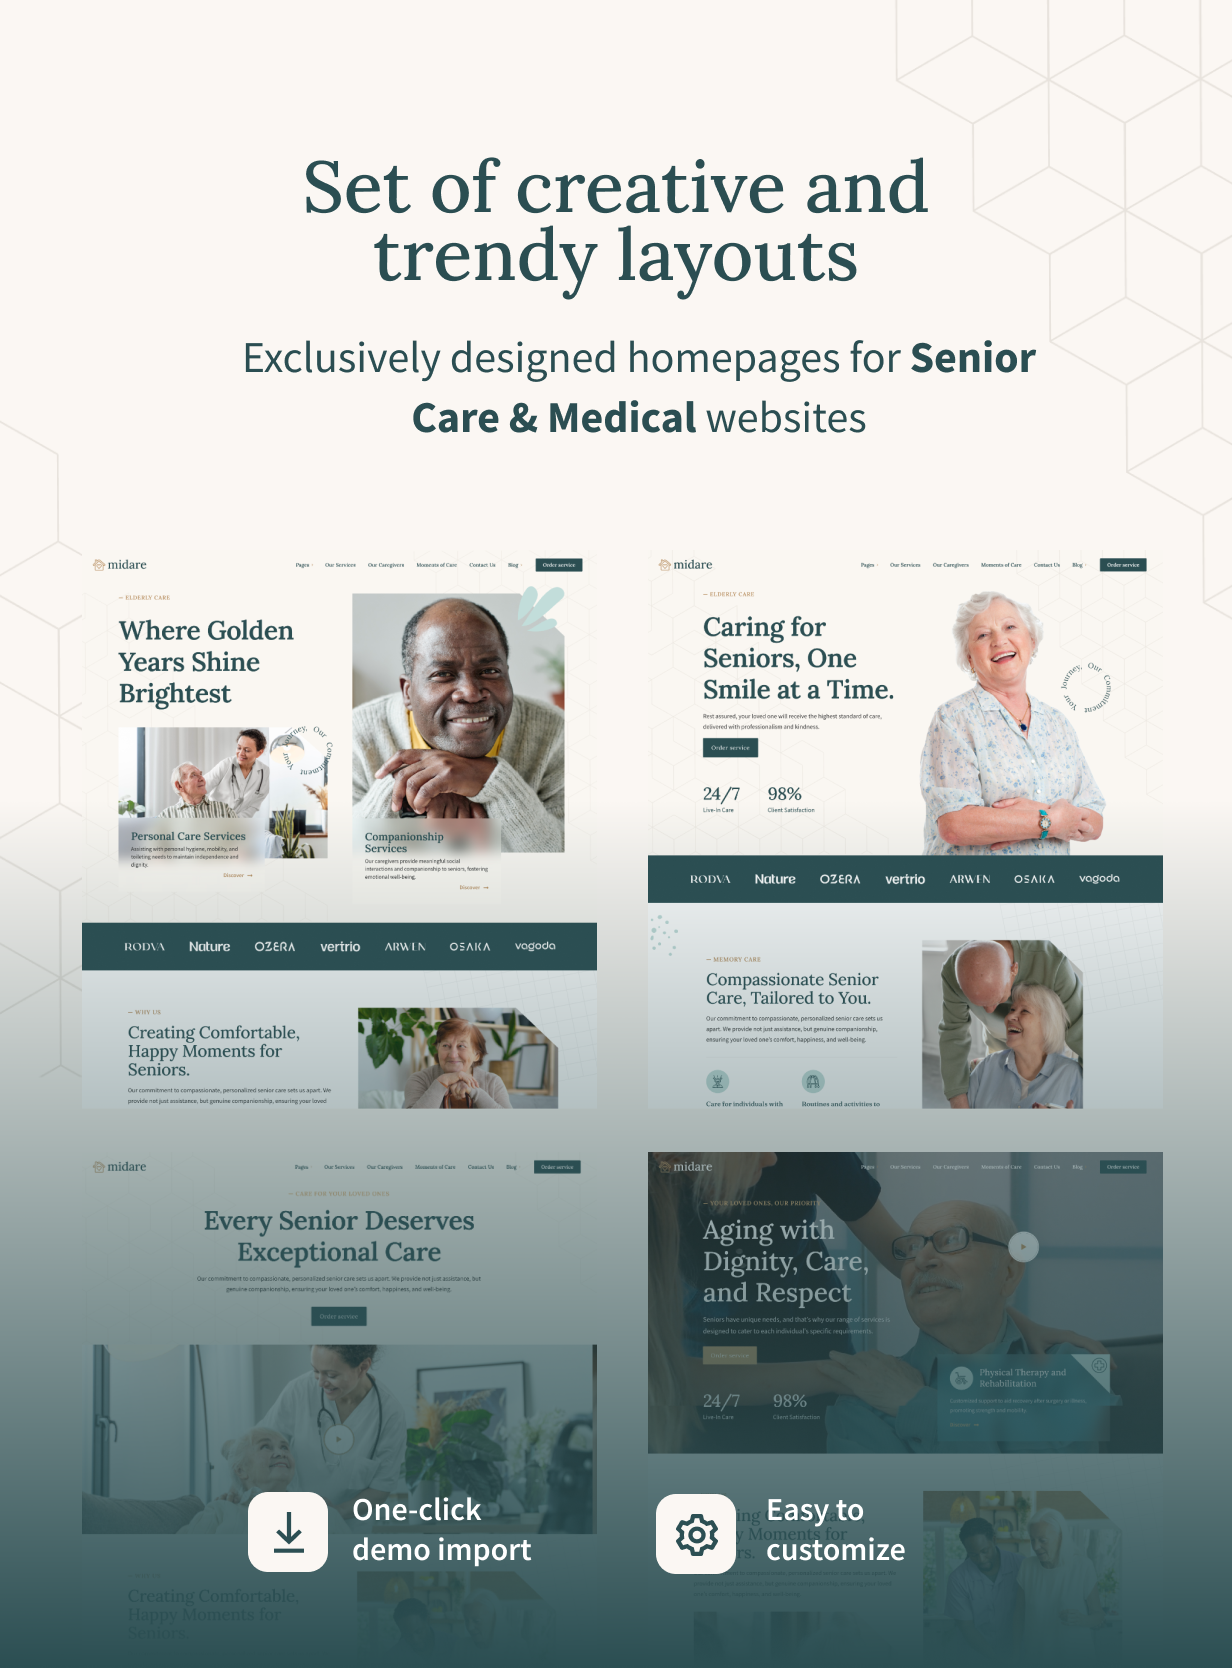 Midare - Senior Care & Medical WordPress Theme